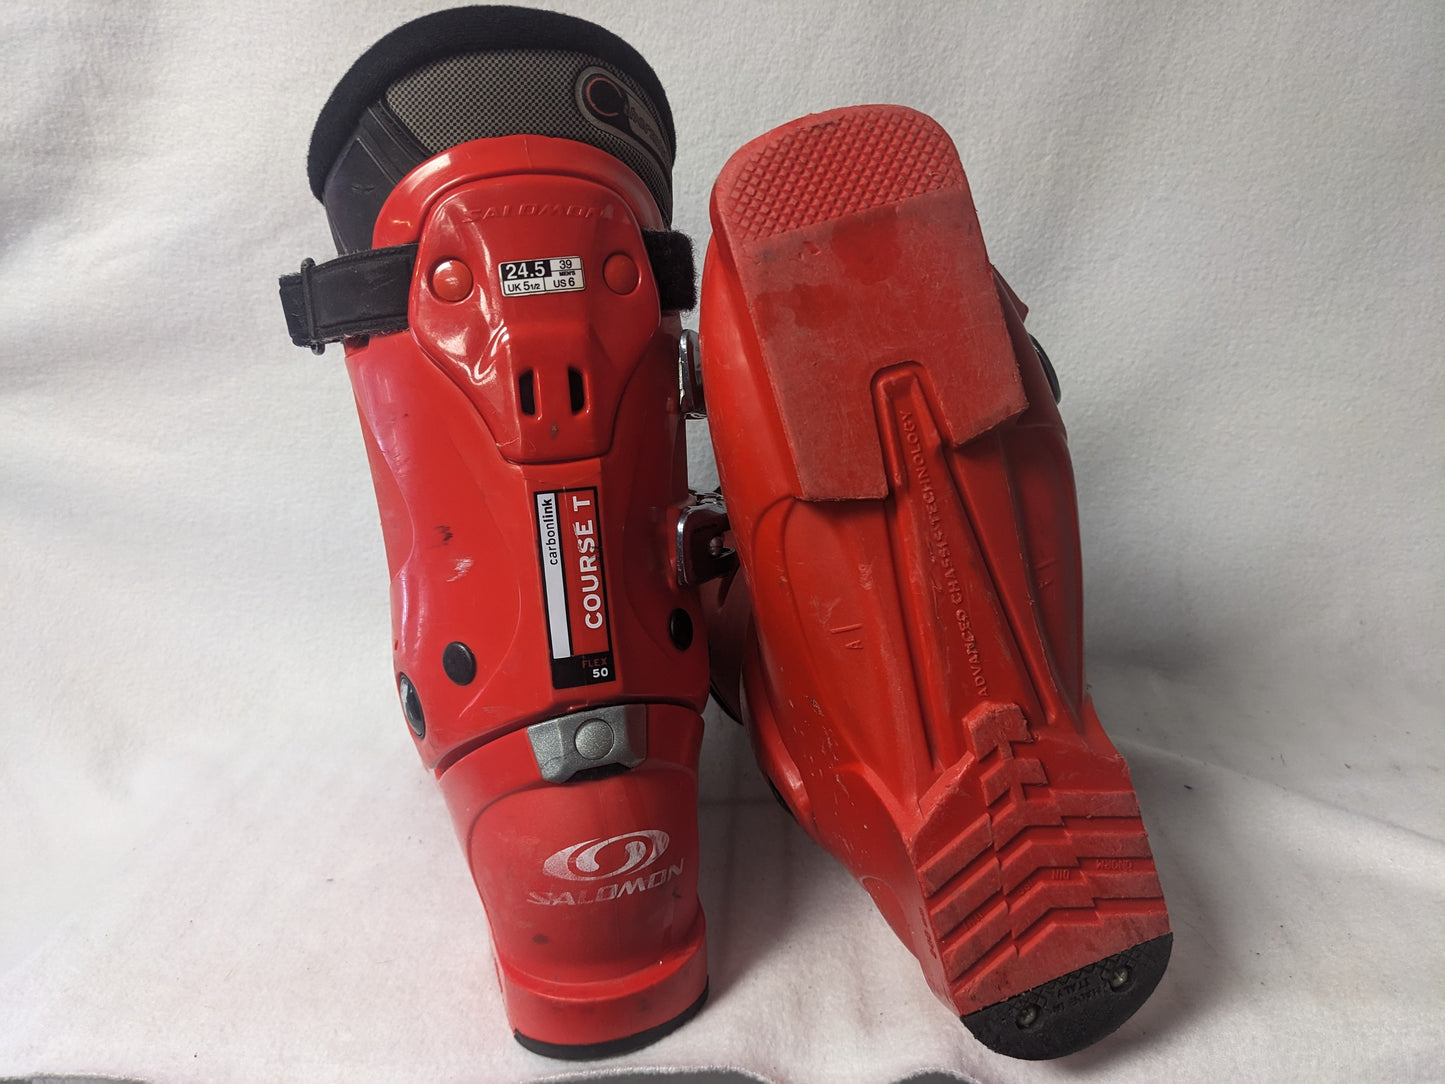 Salomon Course T Flex 50 Ski Boots Size 24.5 Color Red Condition Used